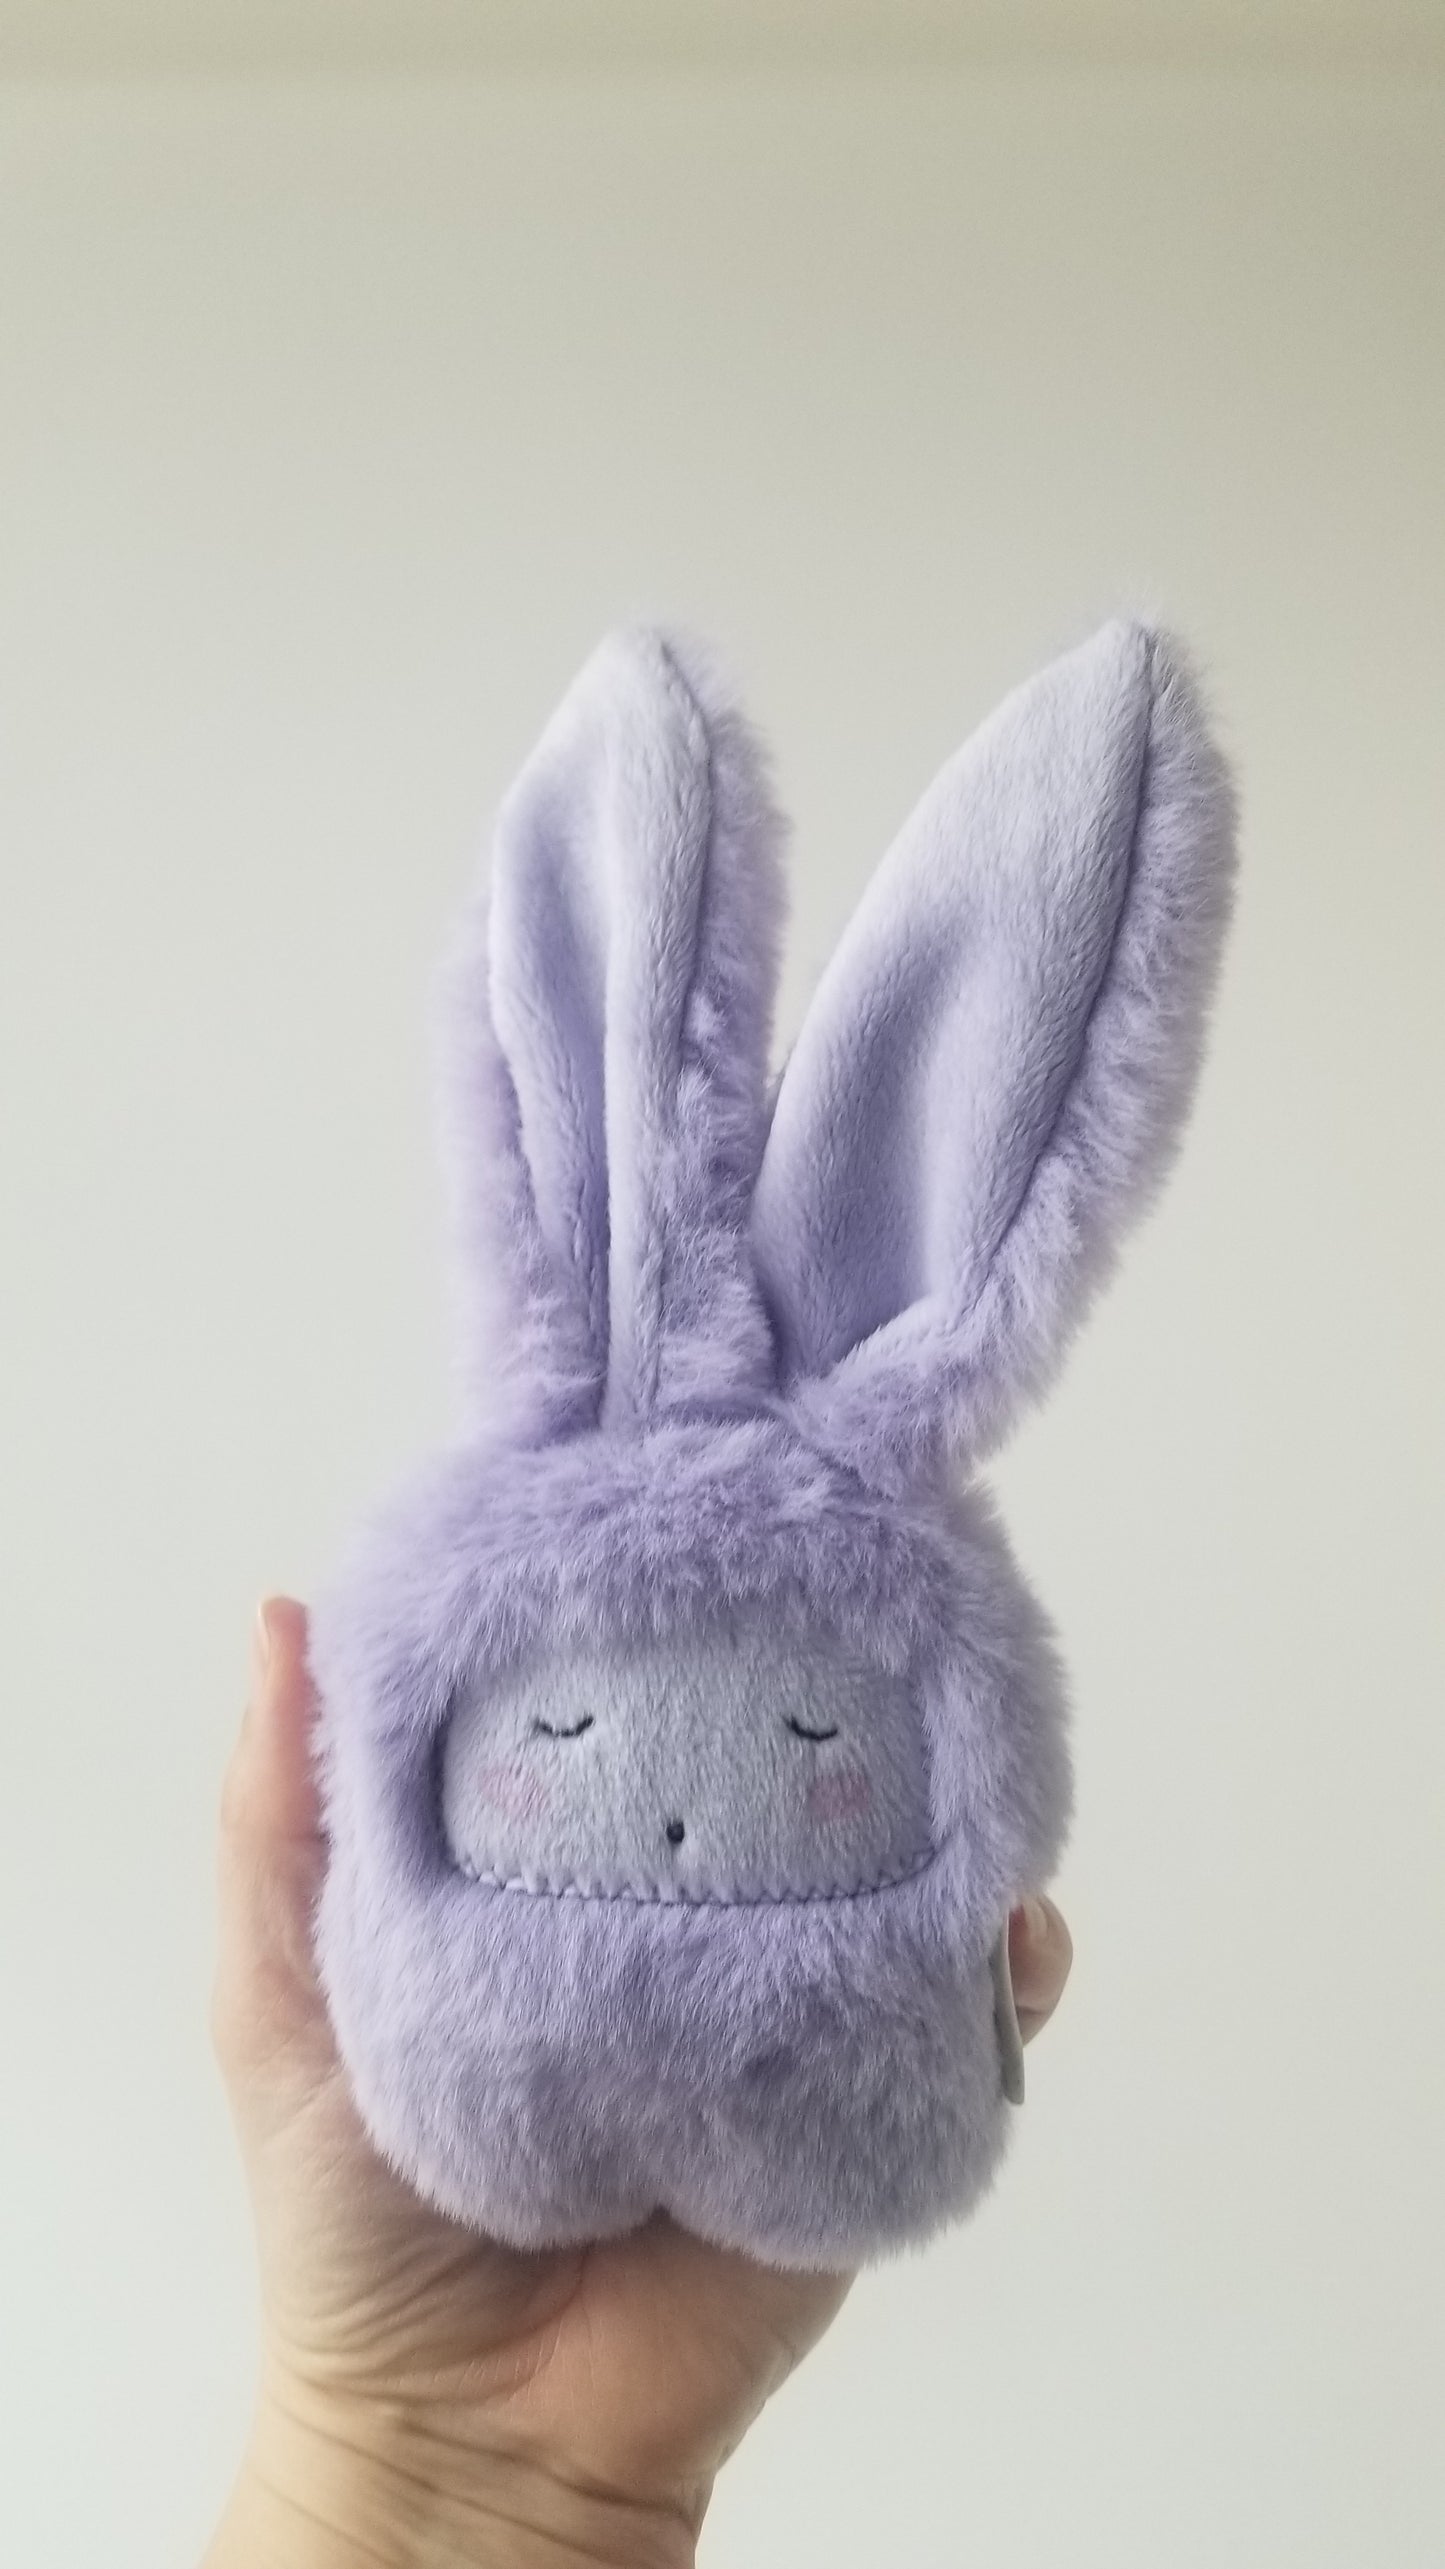 1 plush toy - Lavender Bun - Reserved